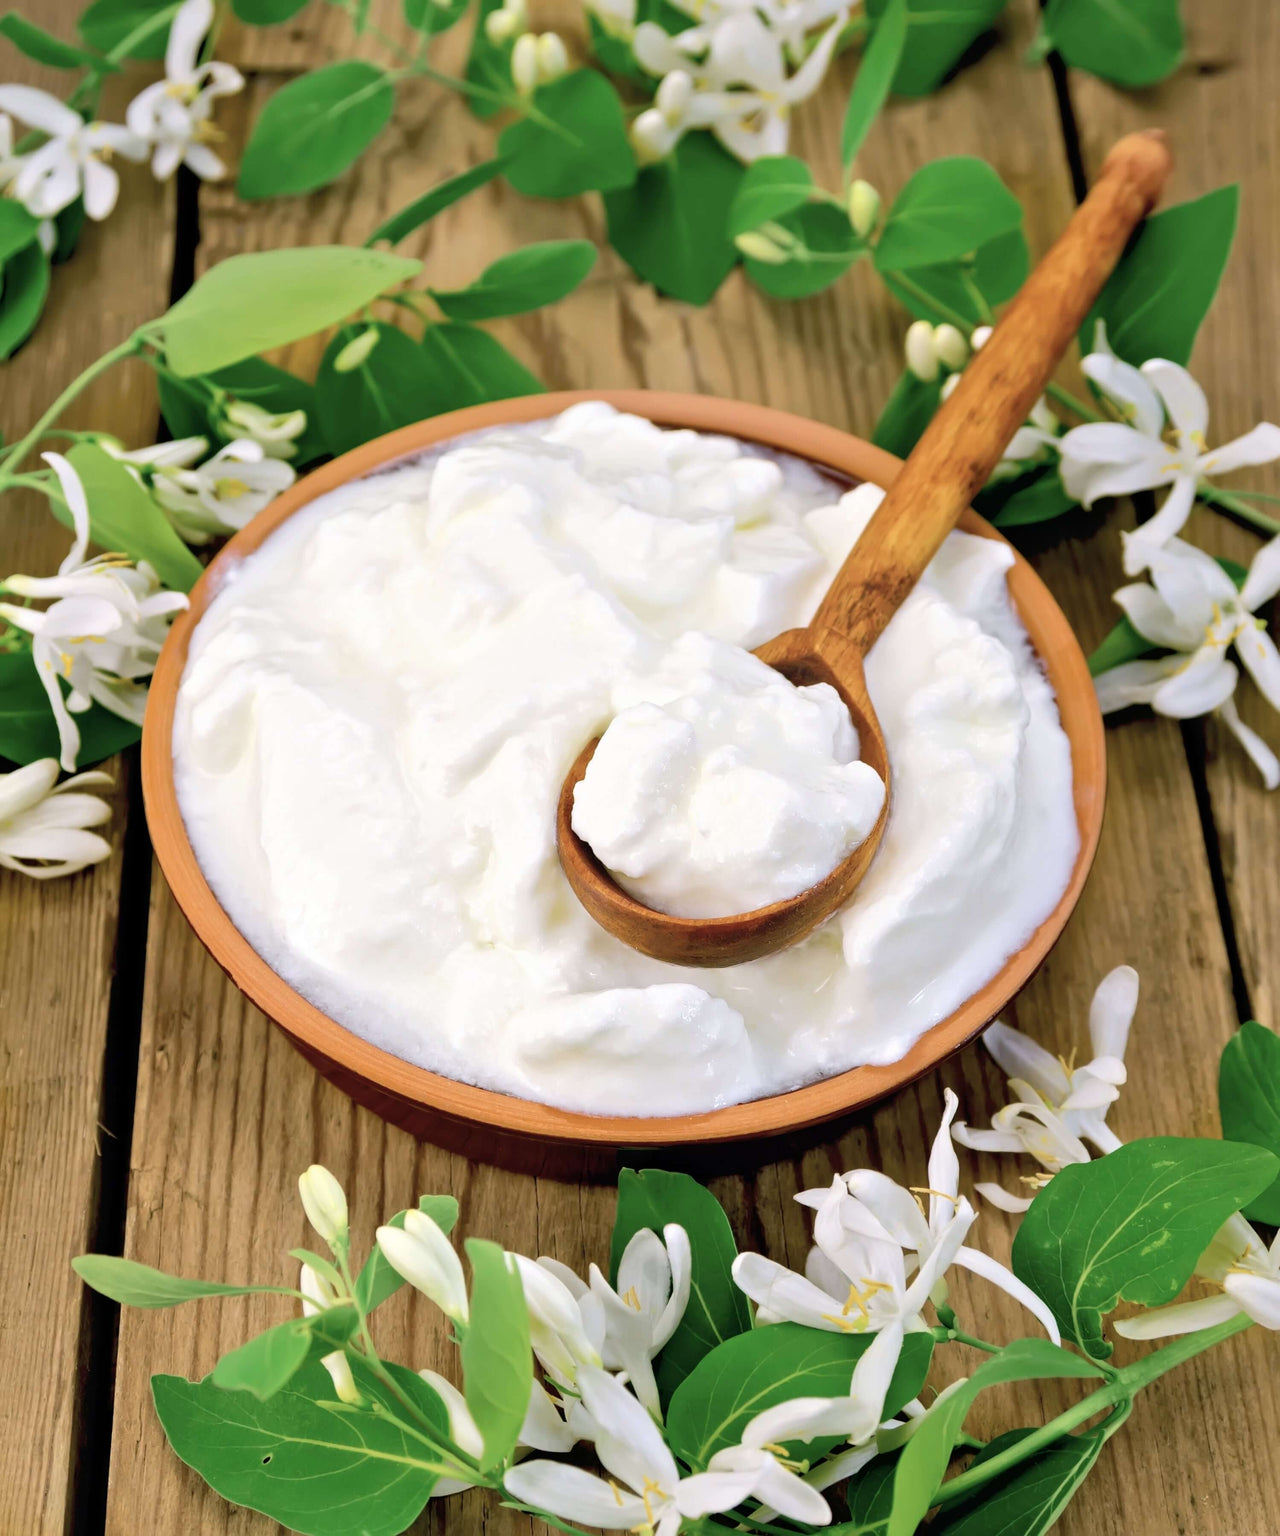 L.Salivarius and L.Reuteri Starter Cultures for homemade yogurt|NPSelection